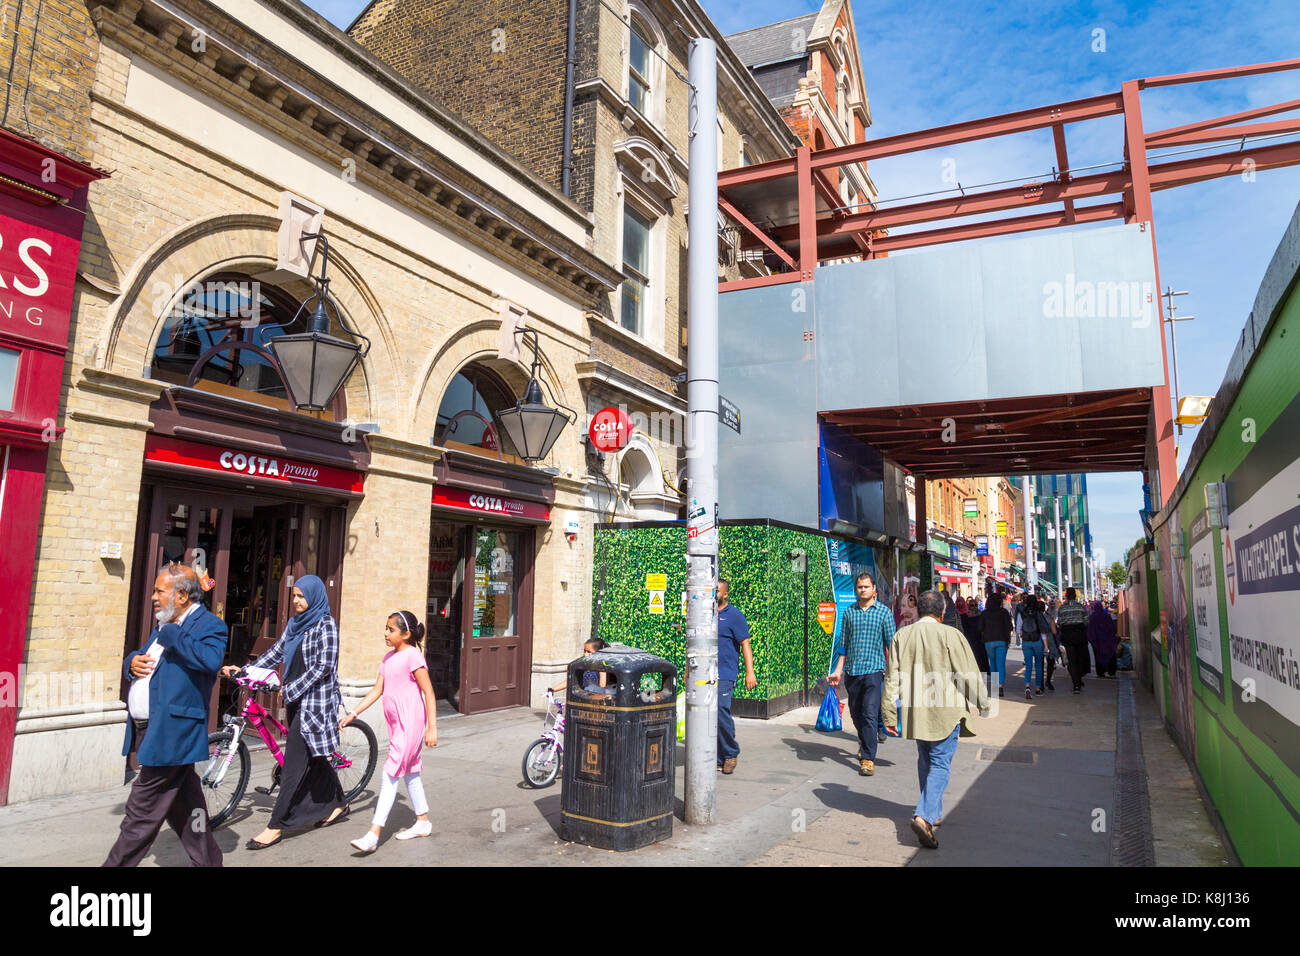 Main entrance of Whitechapel underground station closed during Crossrail development, London, UK Stock Photo